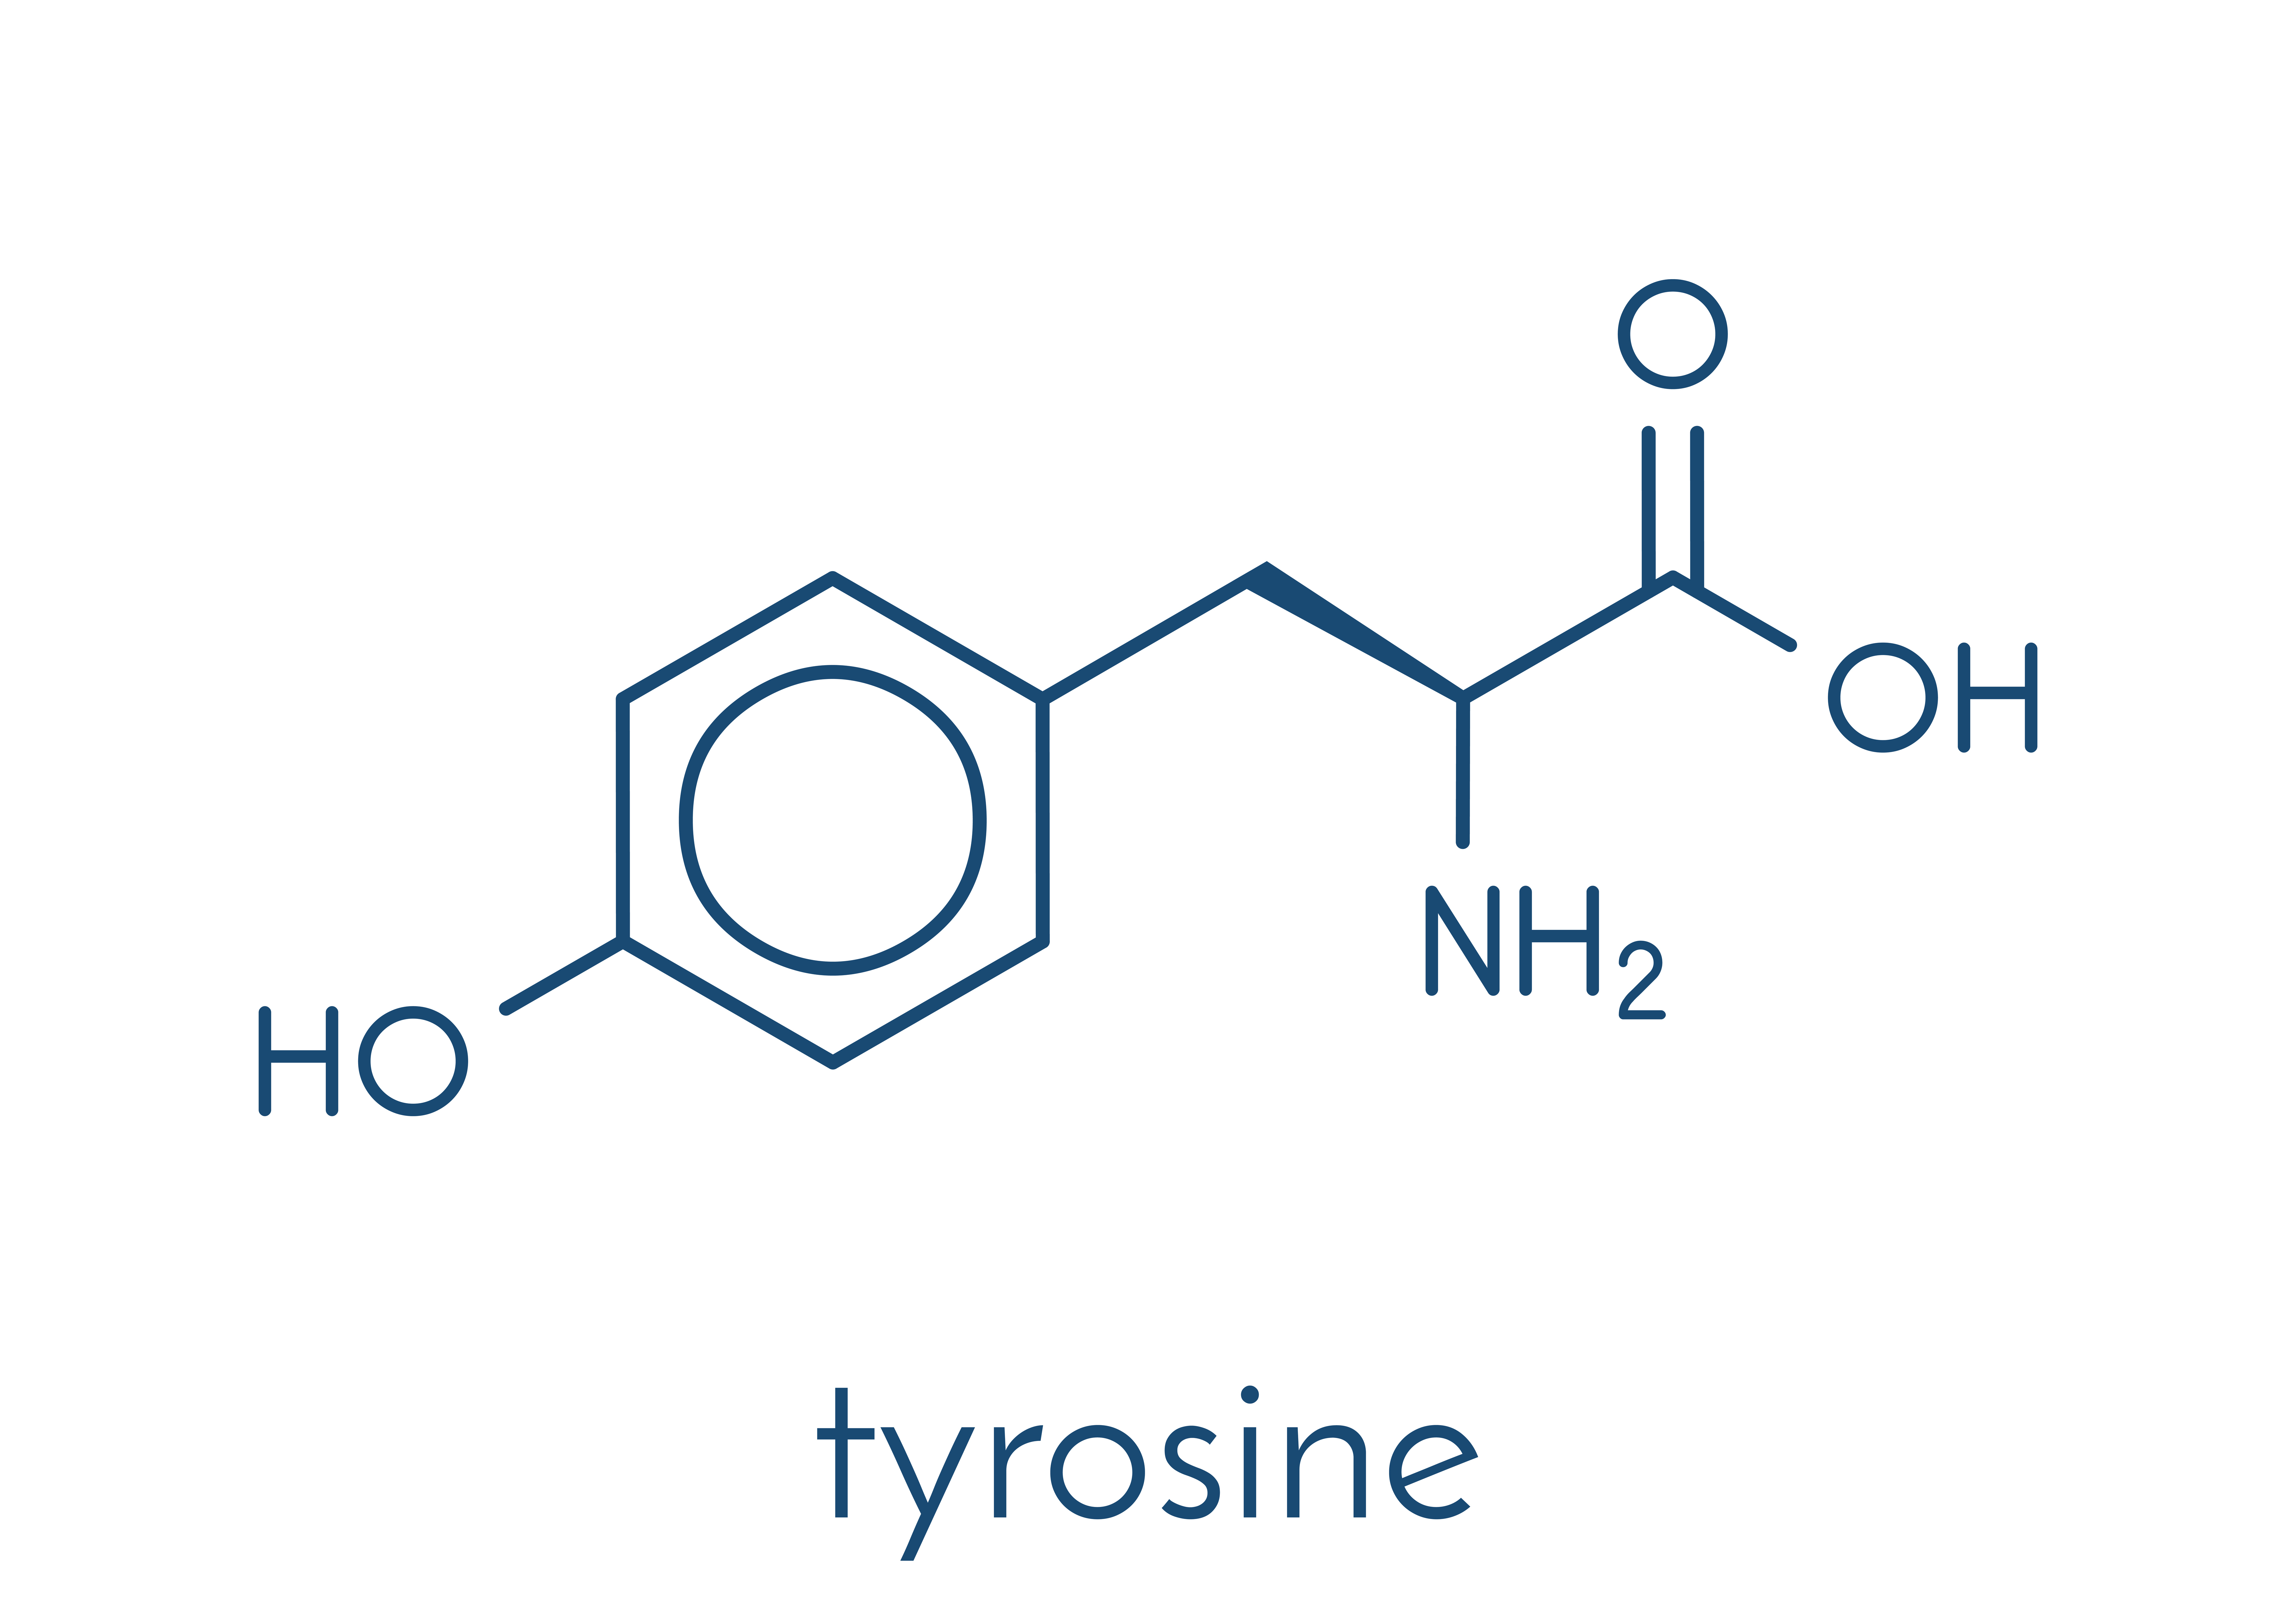 Tyrosine - amino acid important in neurotransmitters synthesis